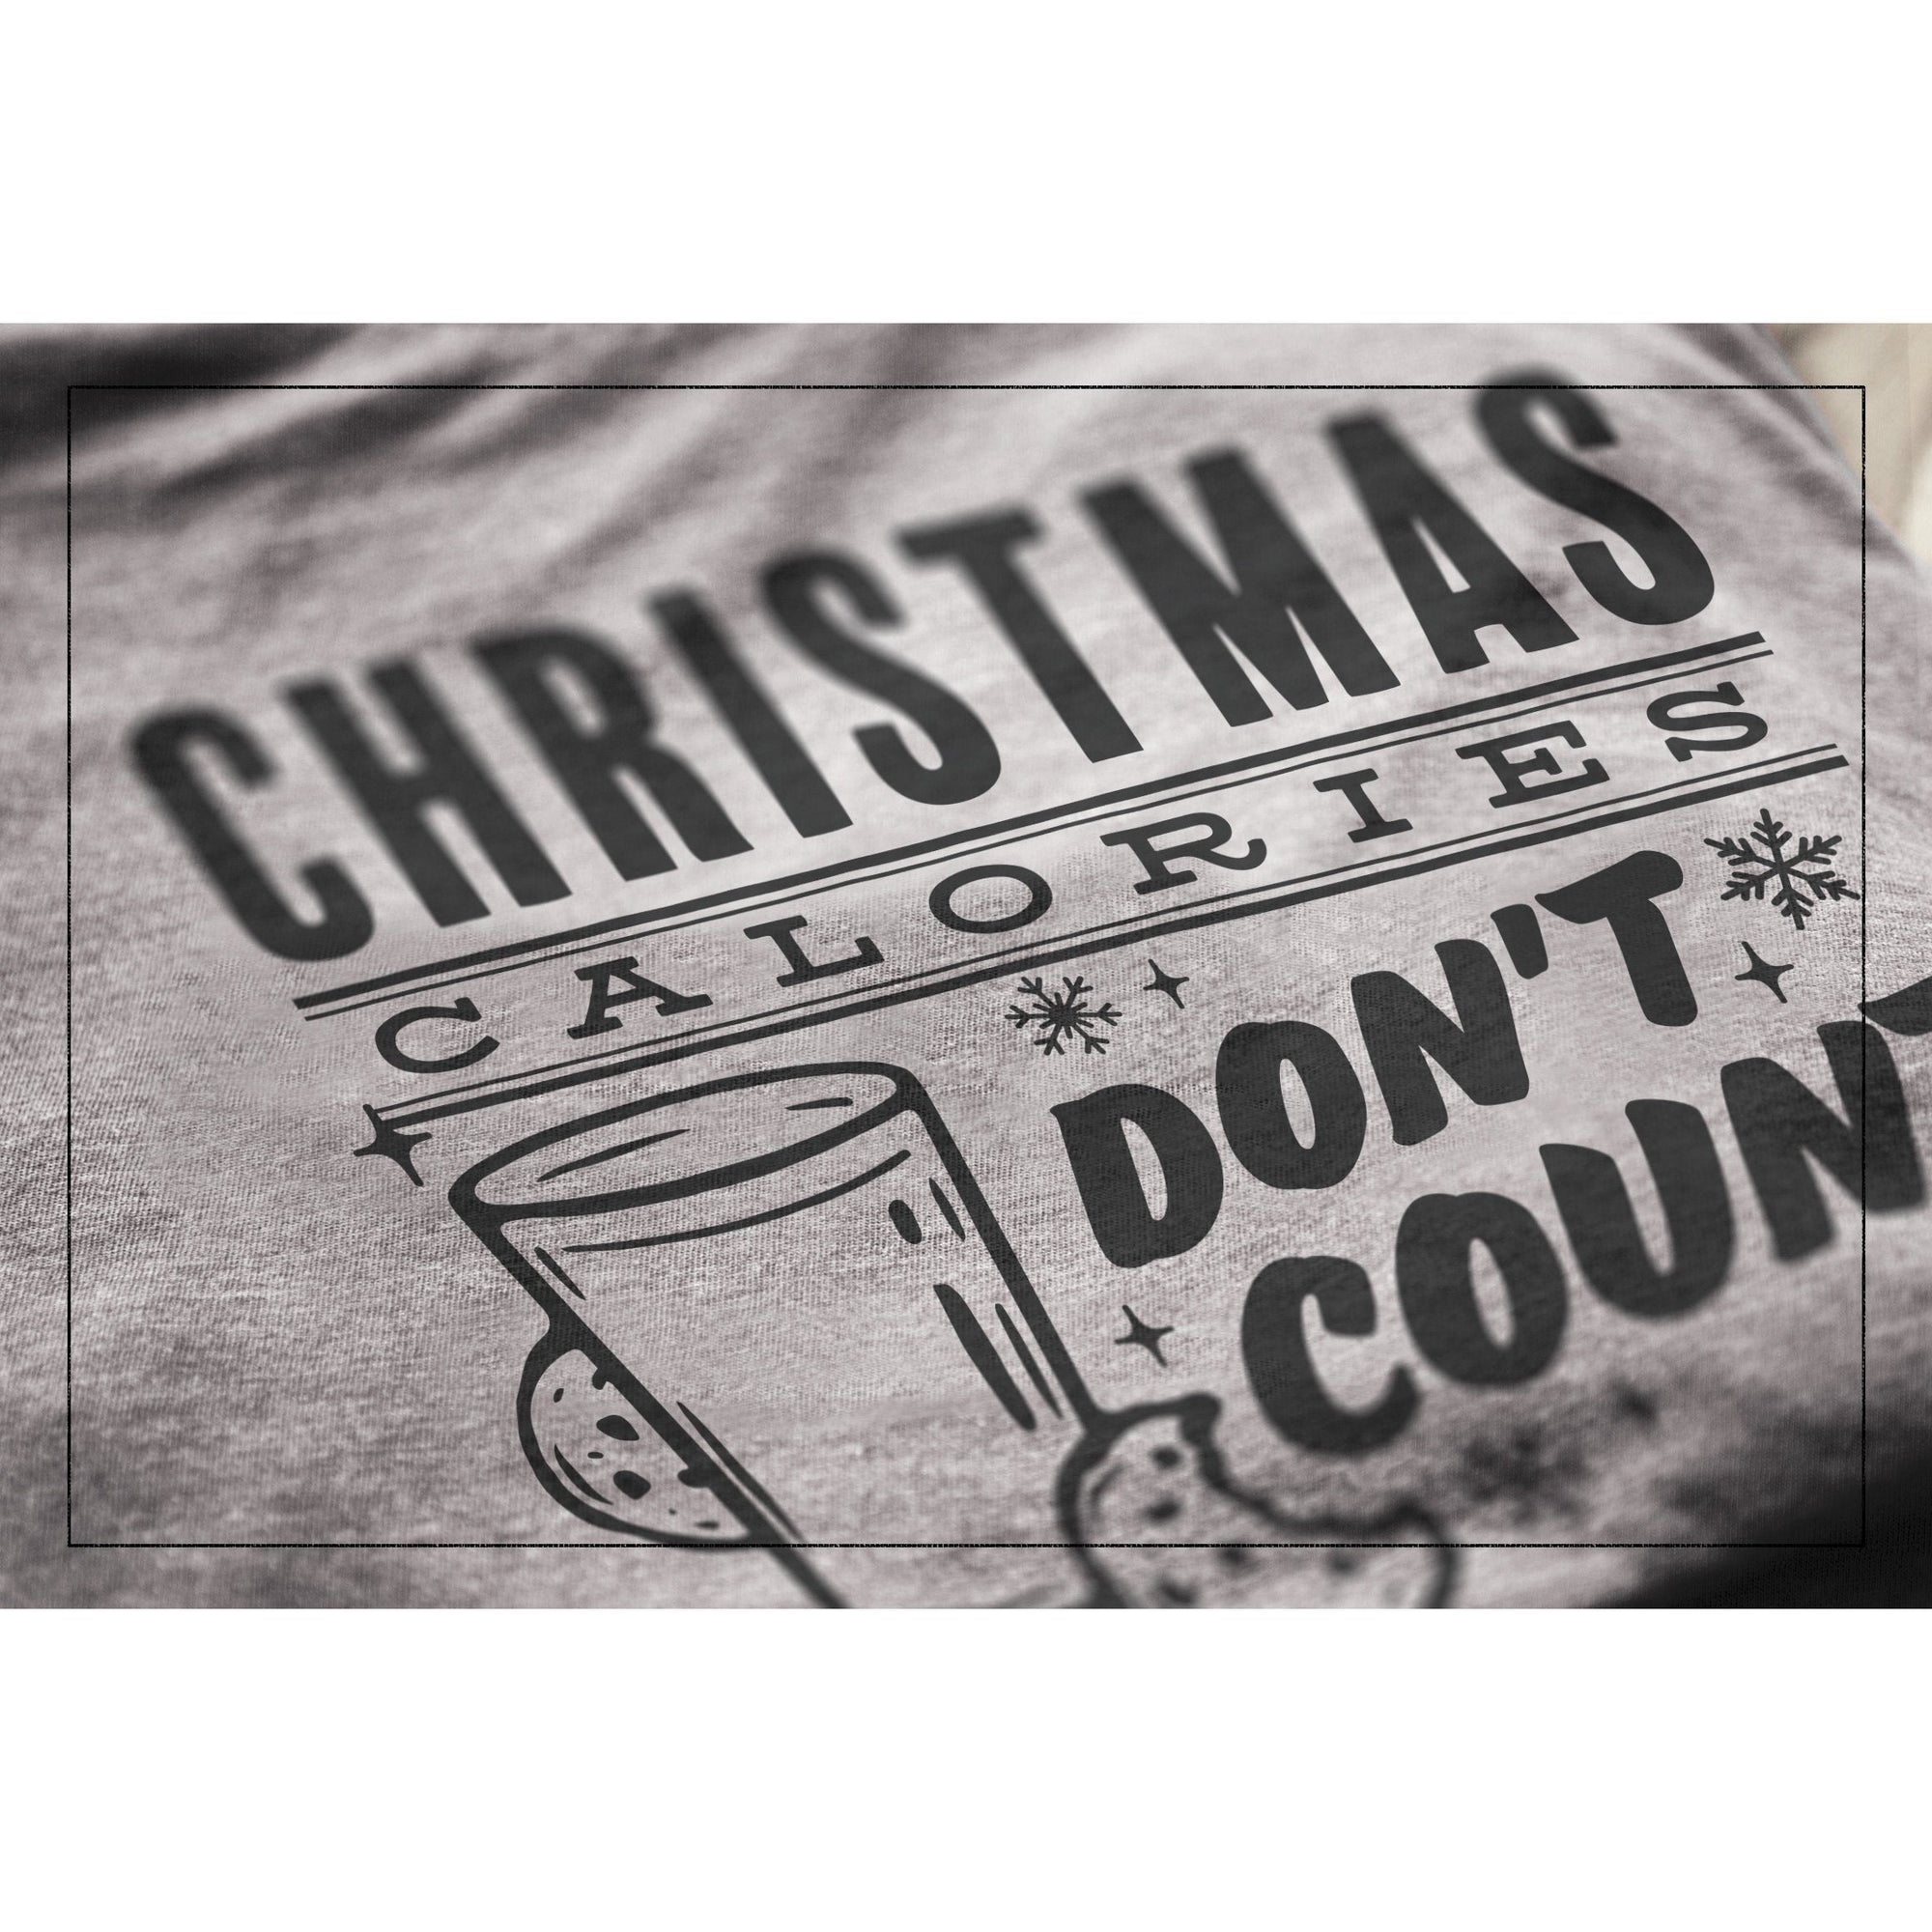 Christmas Calories Don't Count Heather Grey Printed Graphic Men's Crew T-Shirt Tee Closeup Details